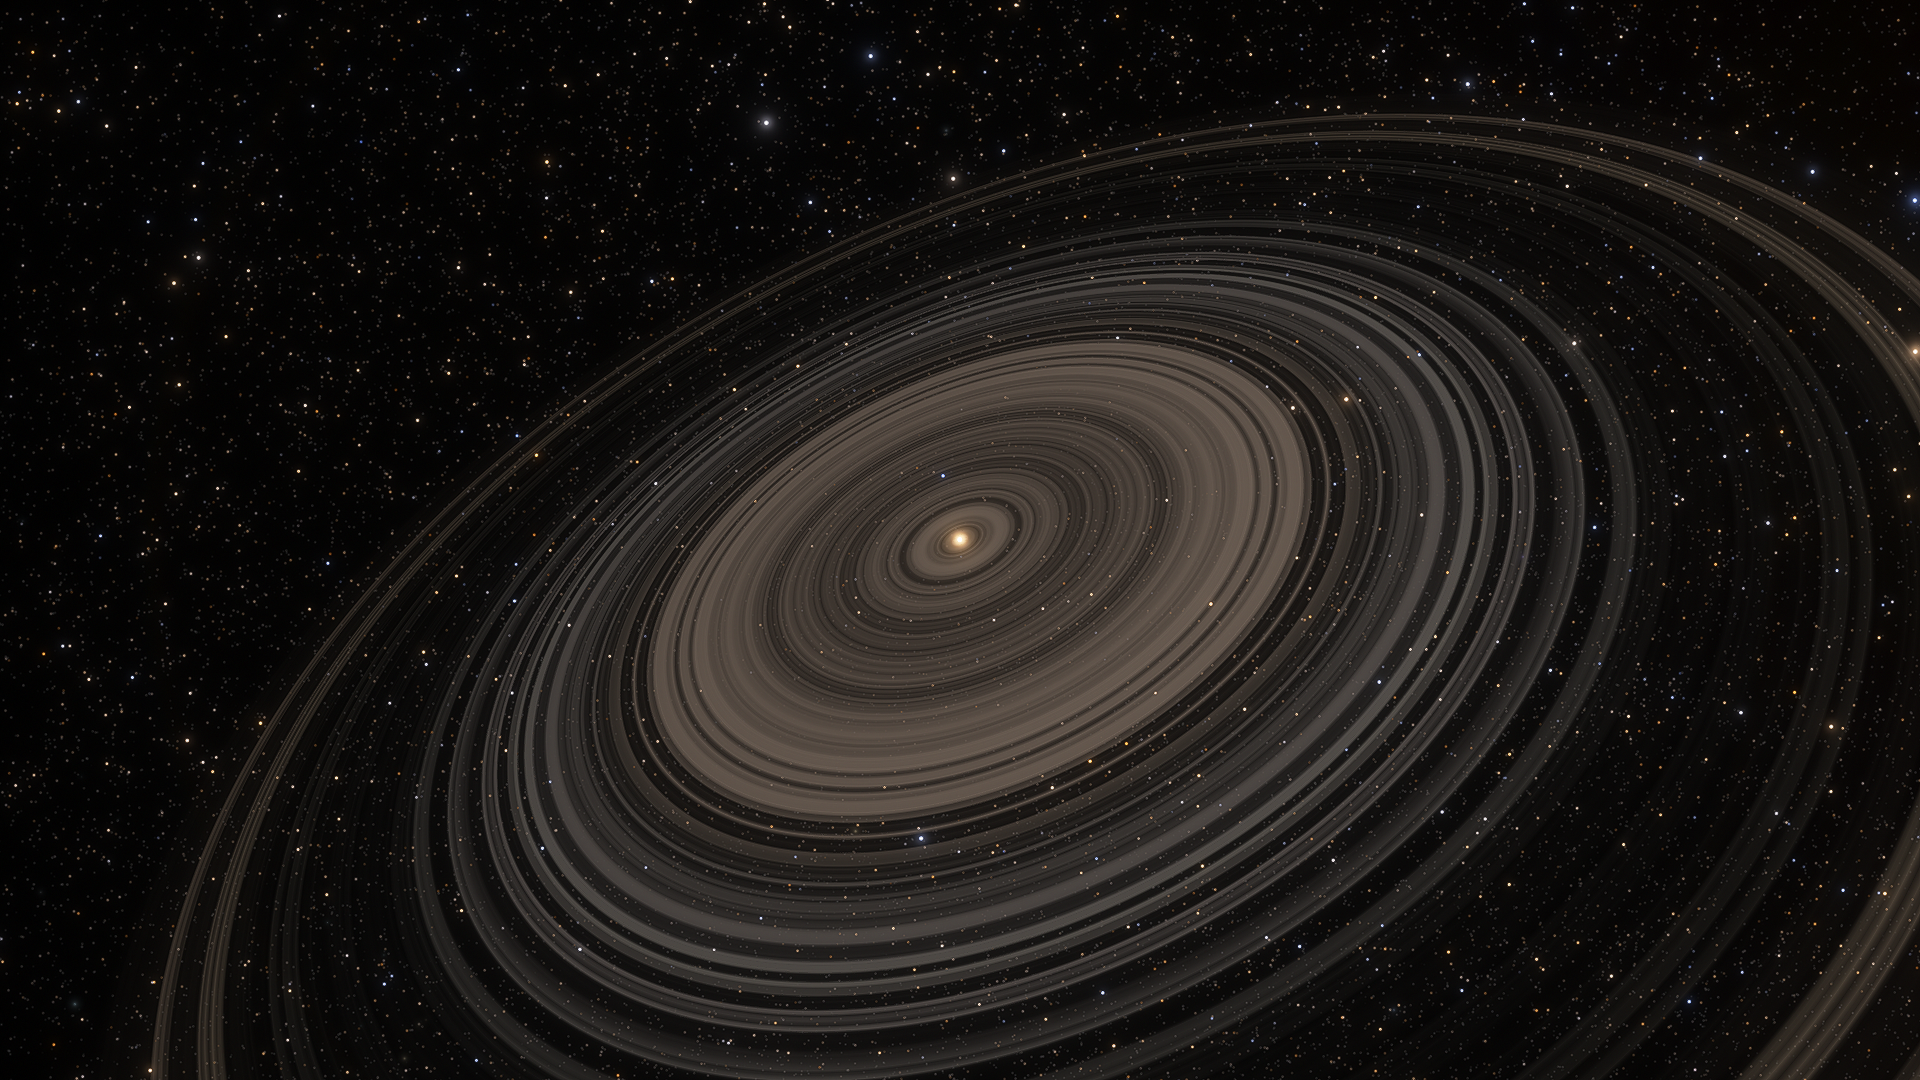 J1407b. The Super Saturn